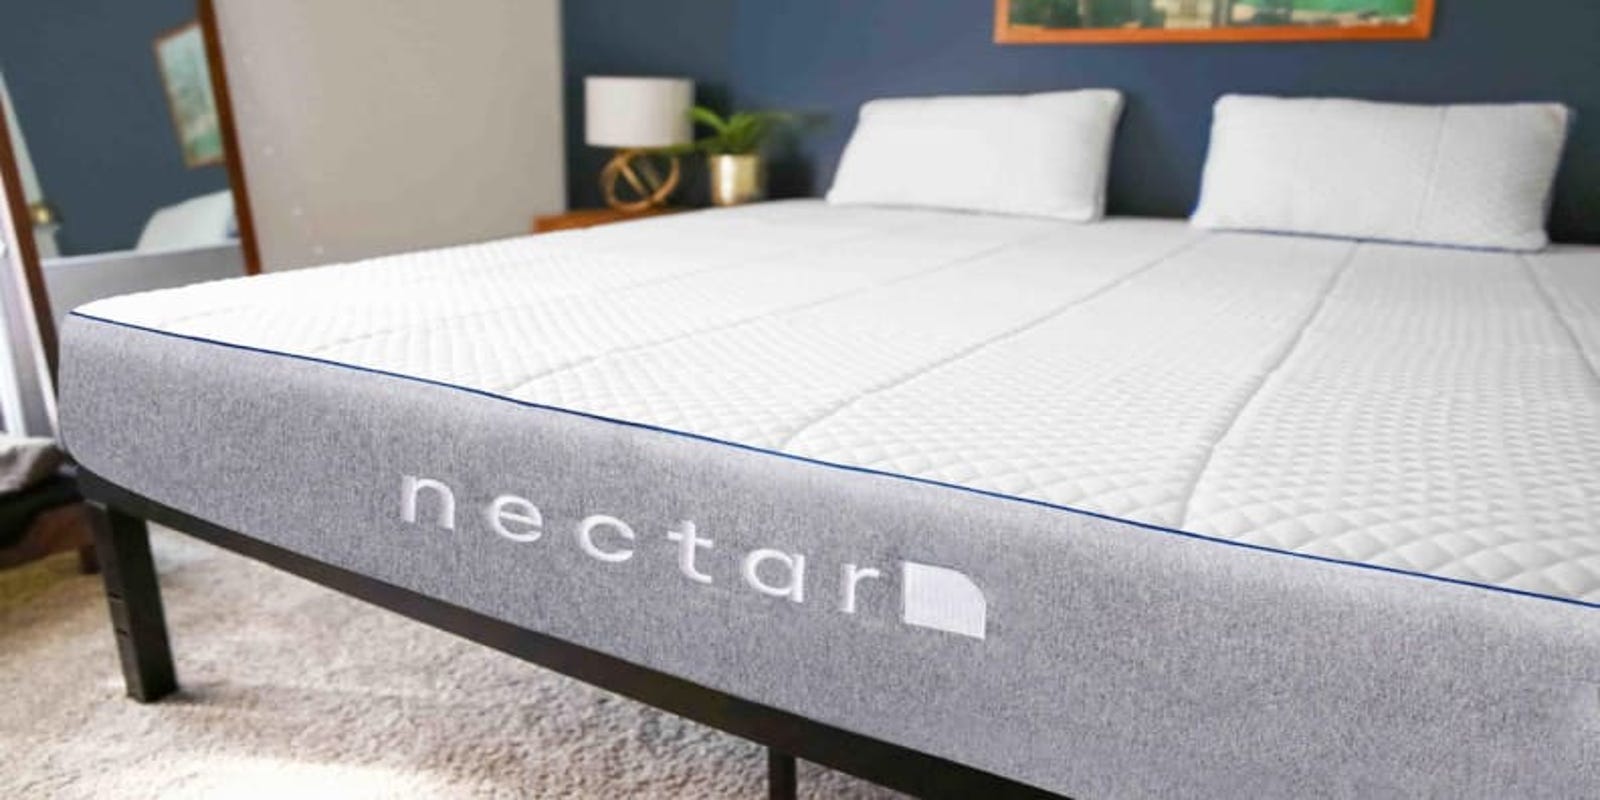 nectar mattress on sleep number foundation d